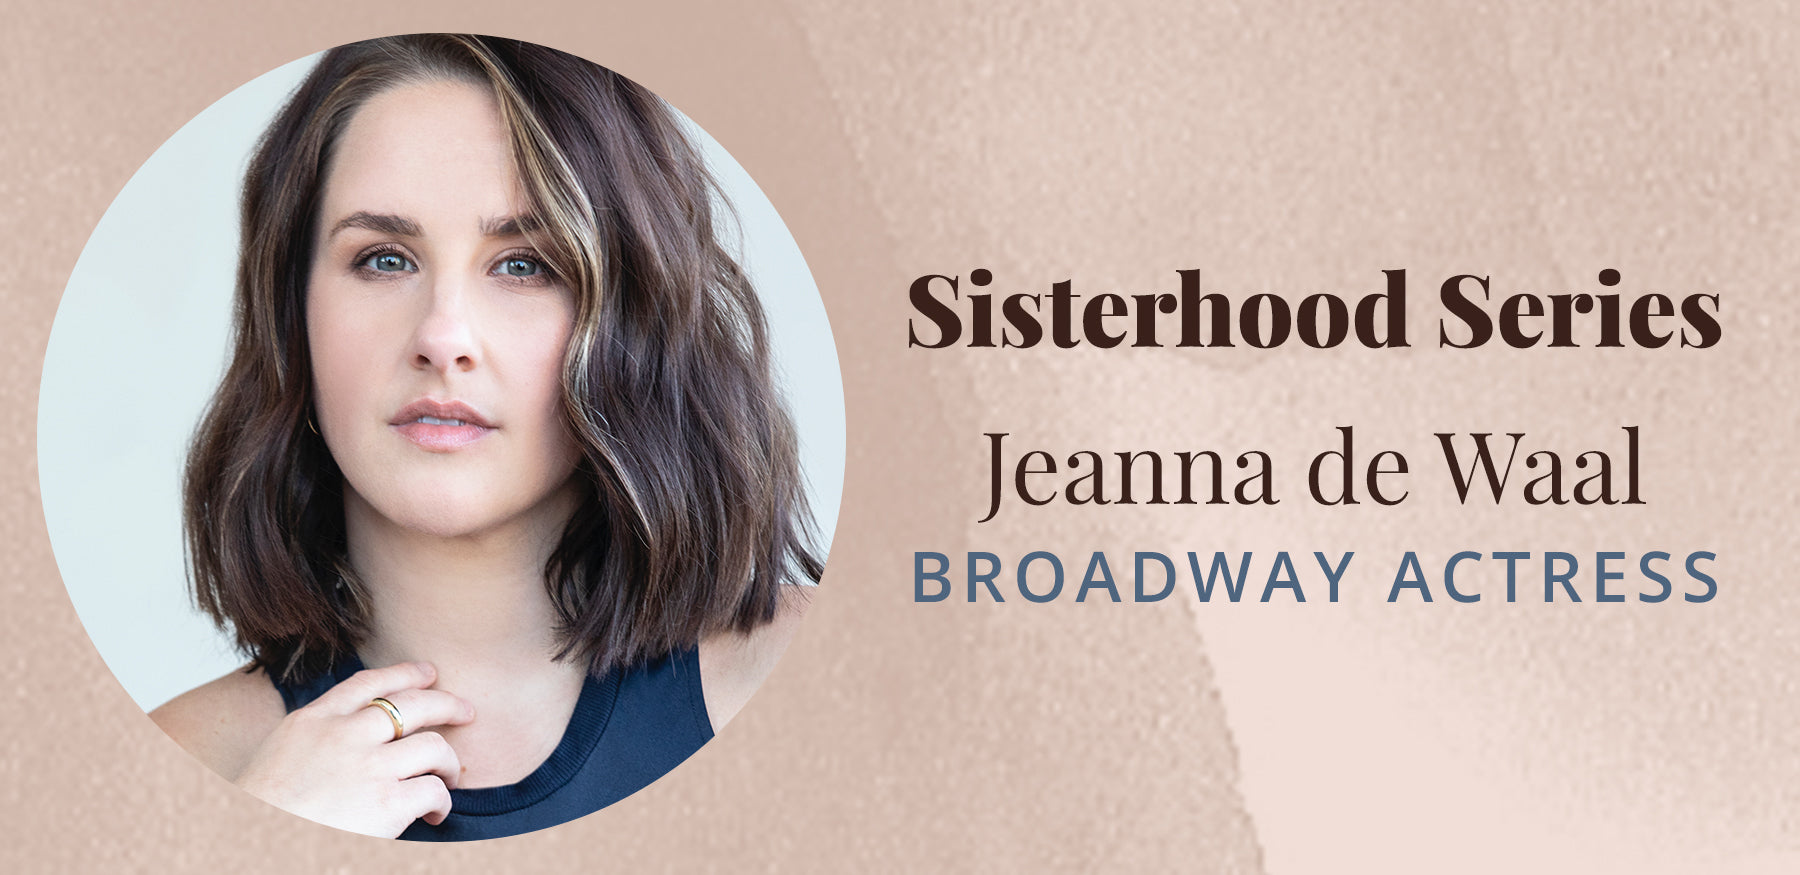 <!--The Sisterhood Series with Jeanna de Waal-->